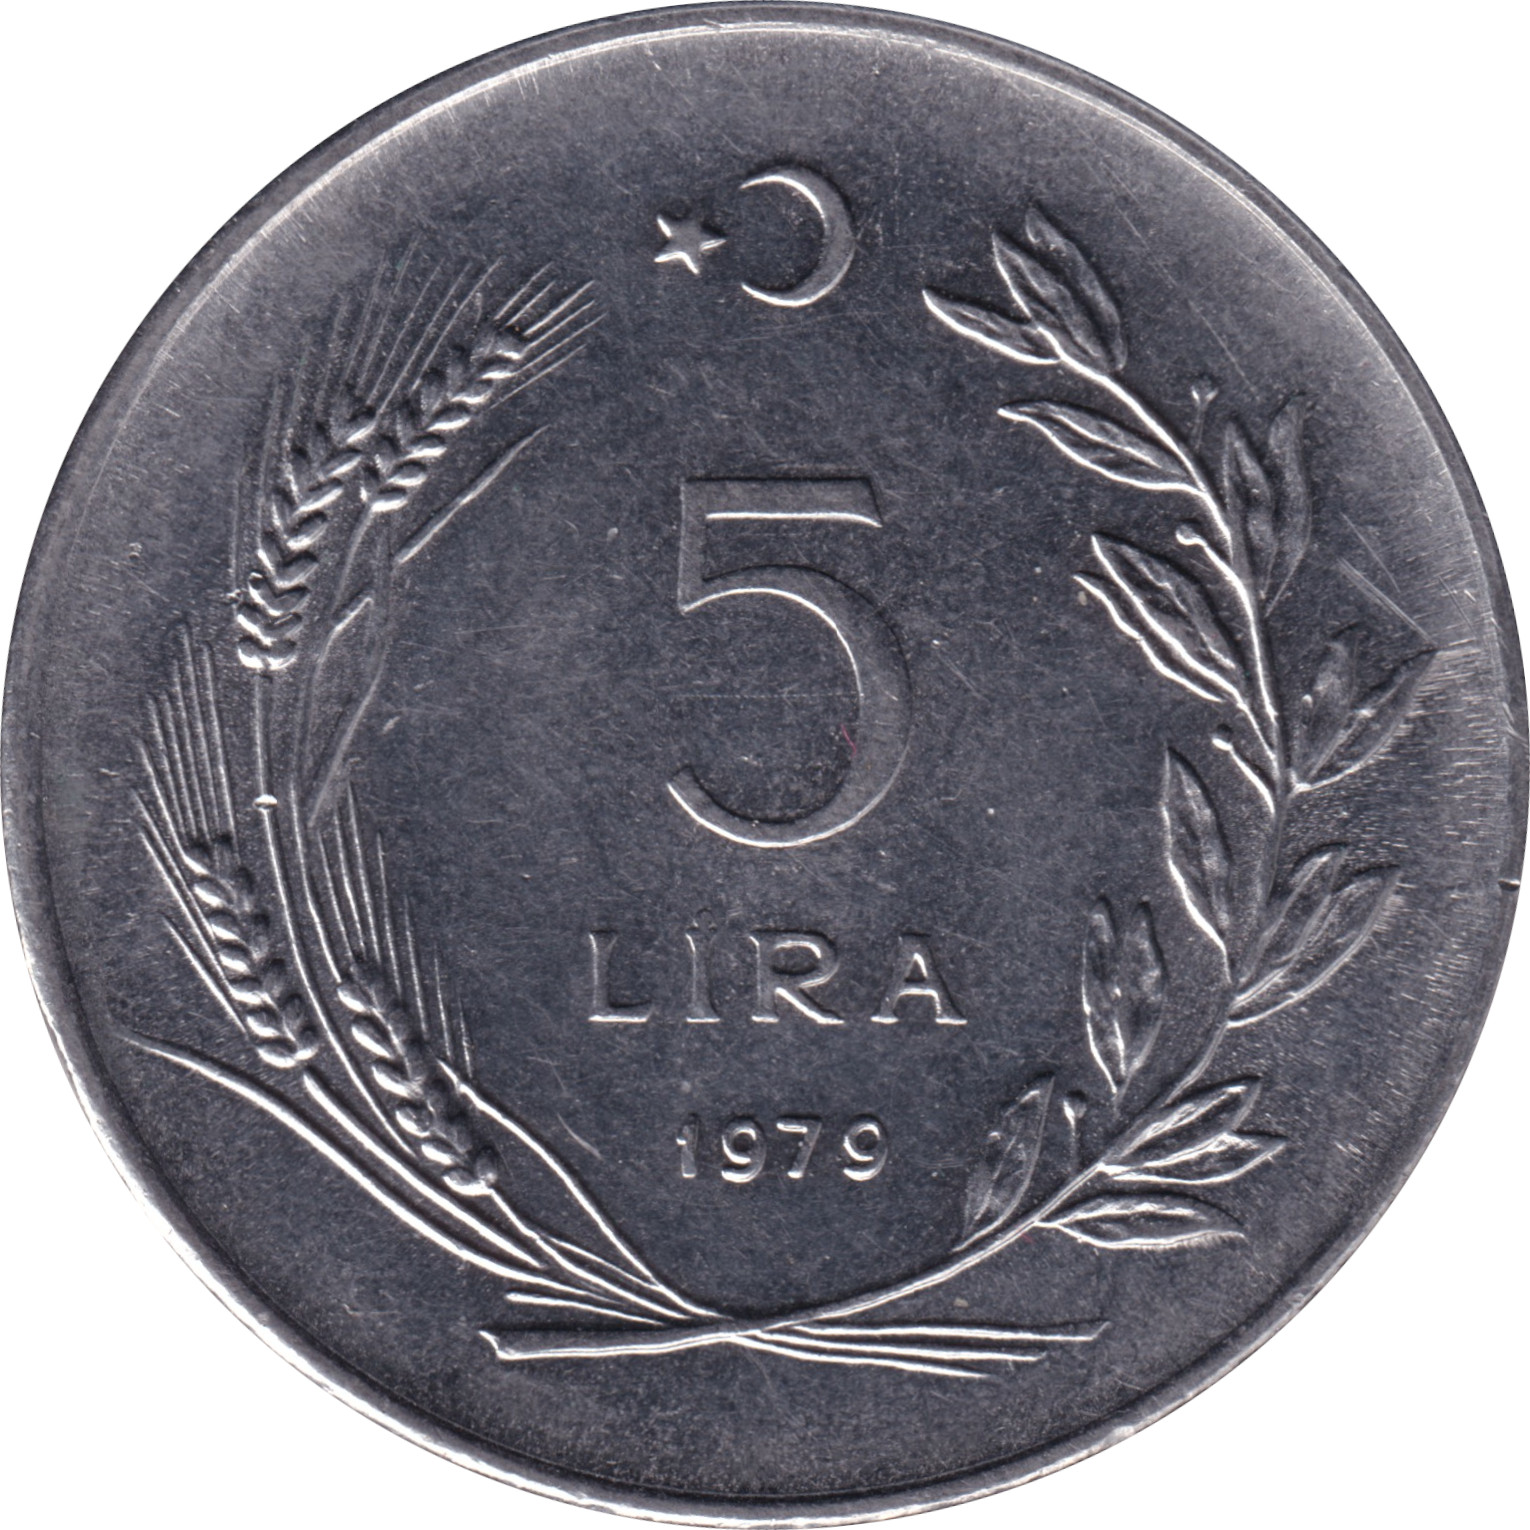 5 lira - Chevalier - Type 1